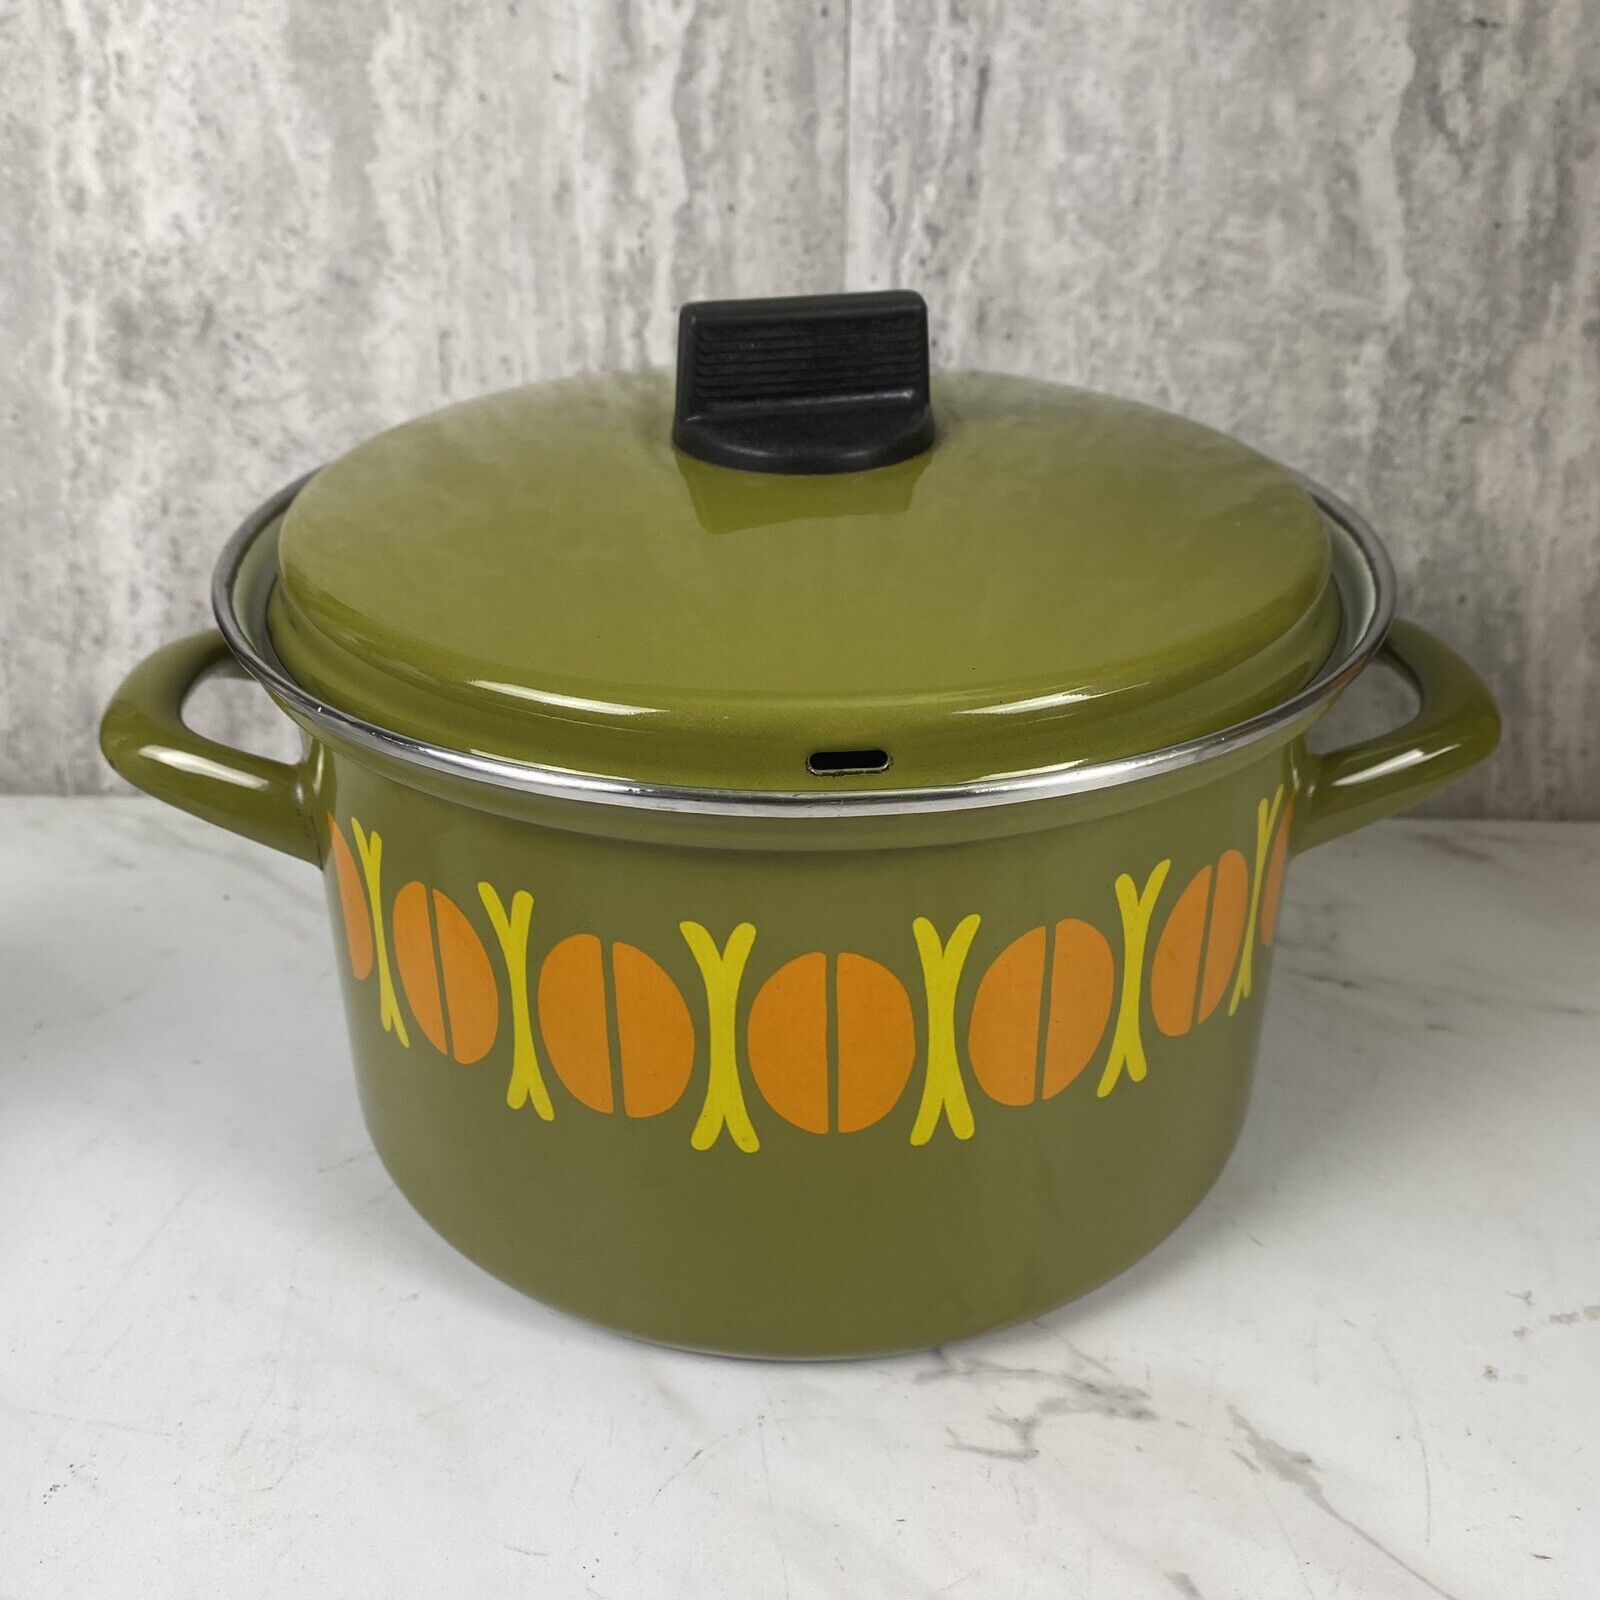 Vintage Austrian Cookware Enamel Coated Avocado Green 9” X 5” Stock Pot W Lid